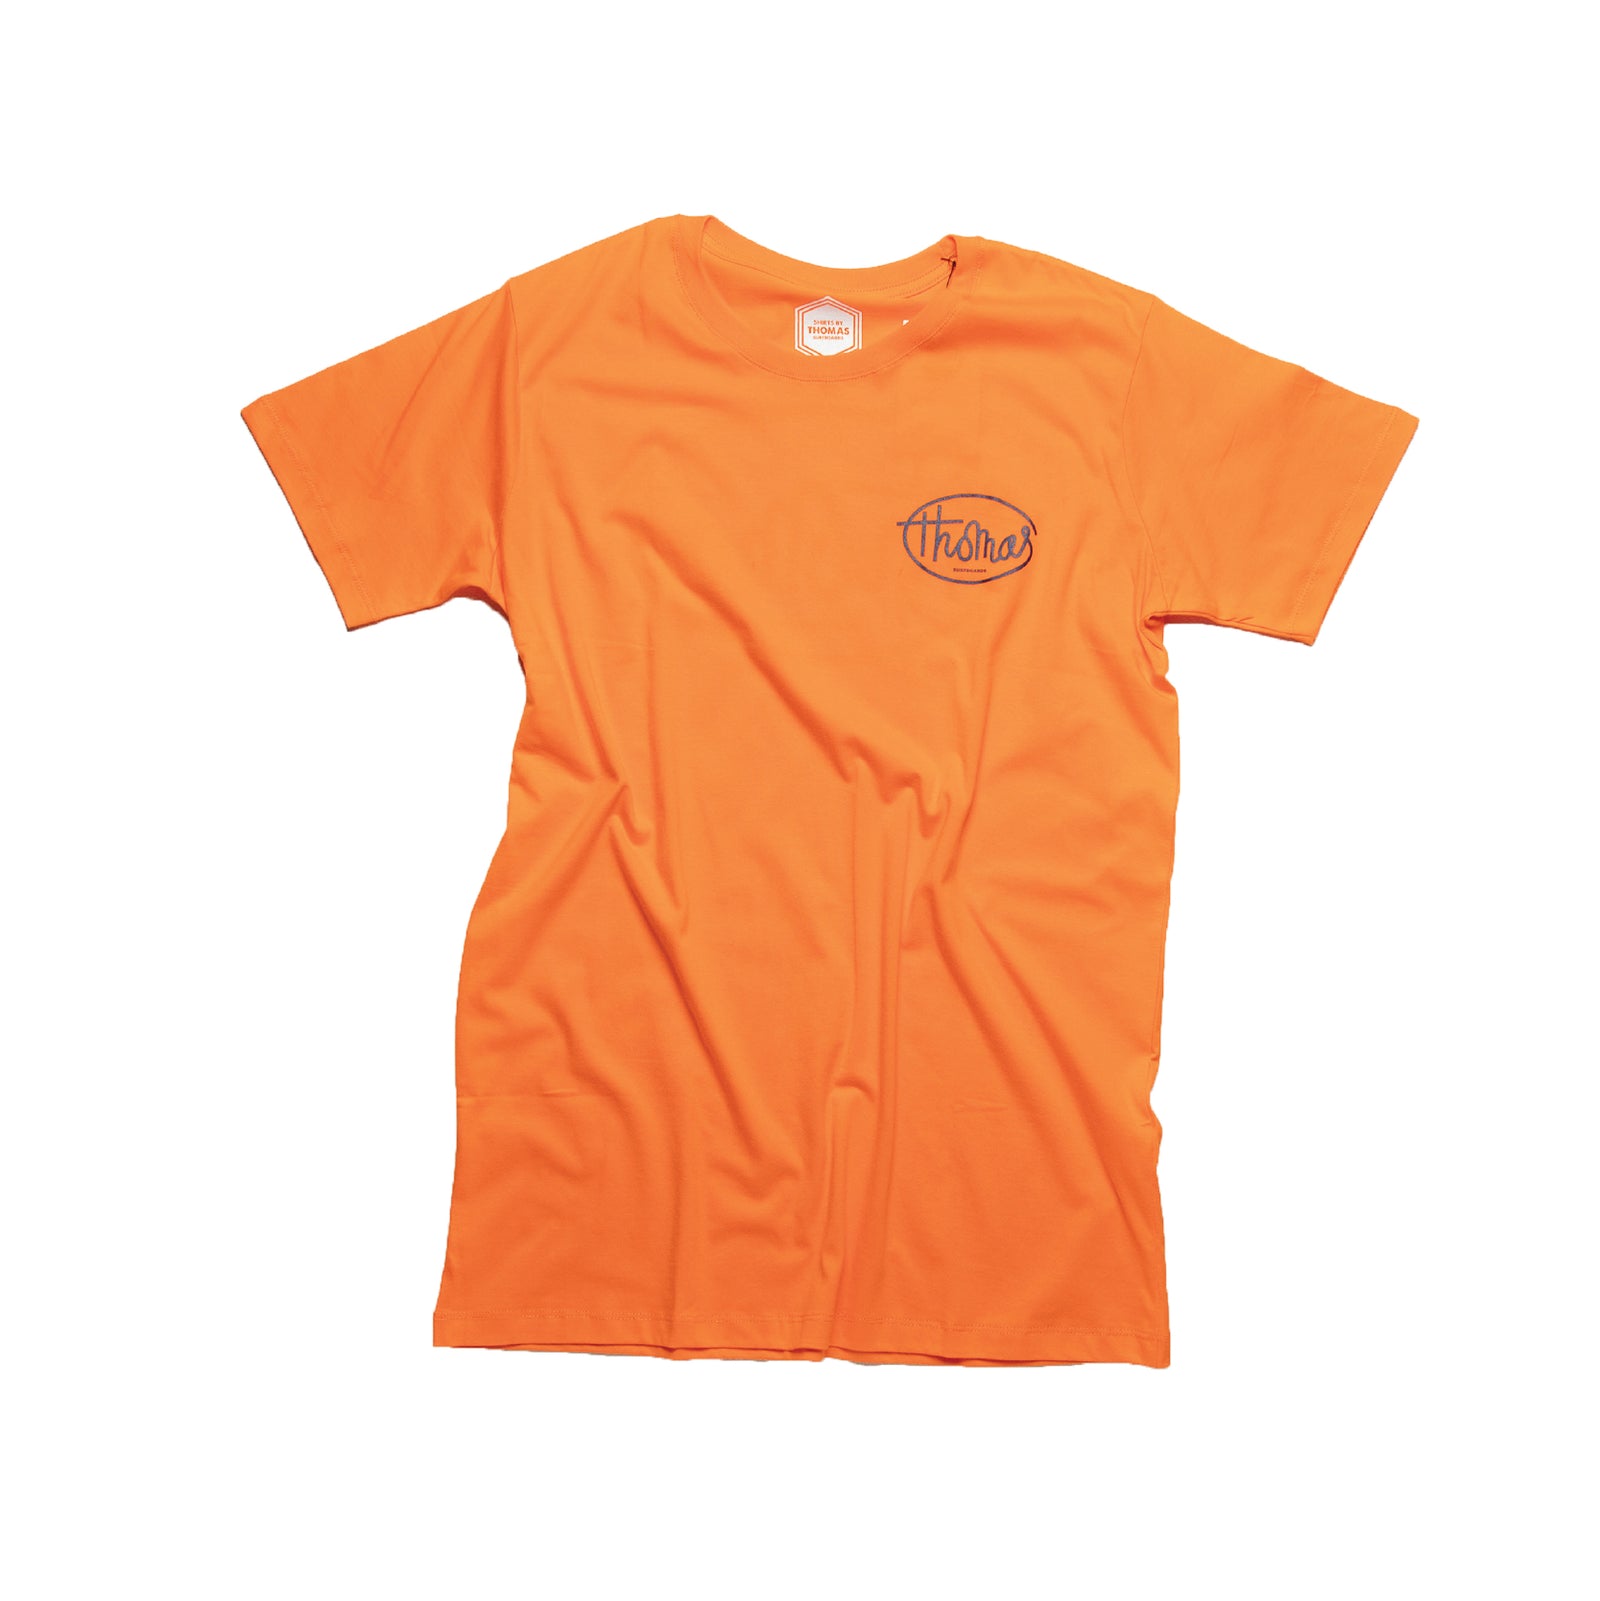 Thomas x McNeil T-Shirt Orange